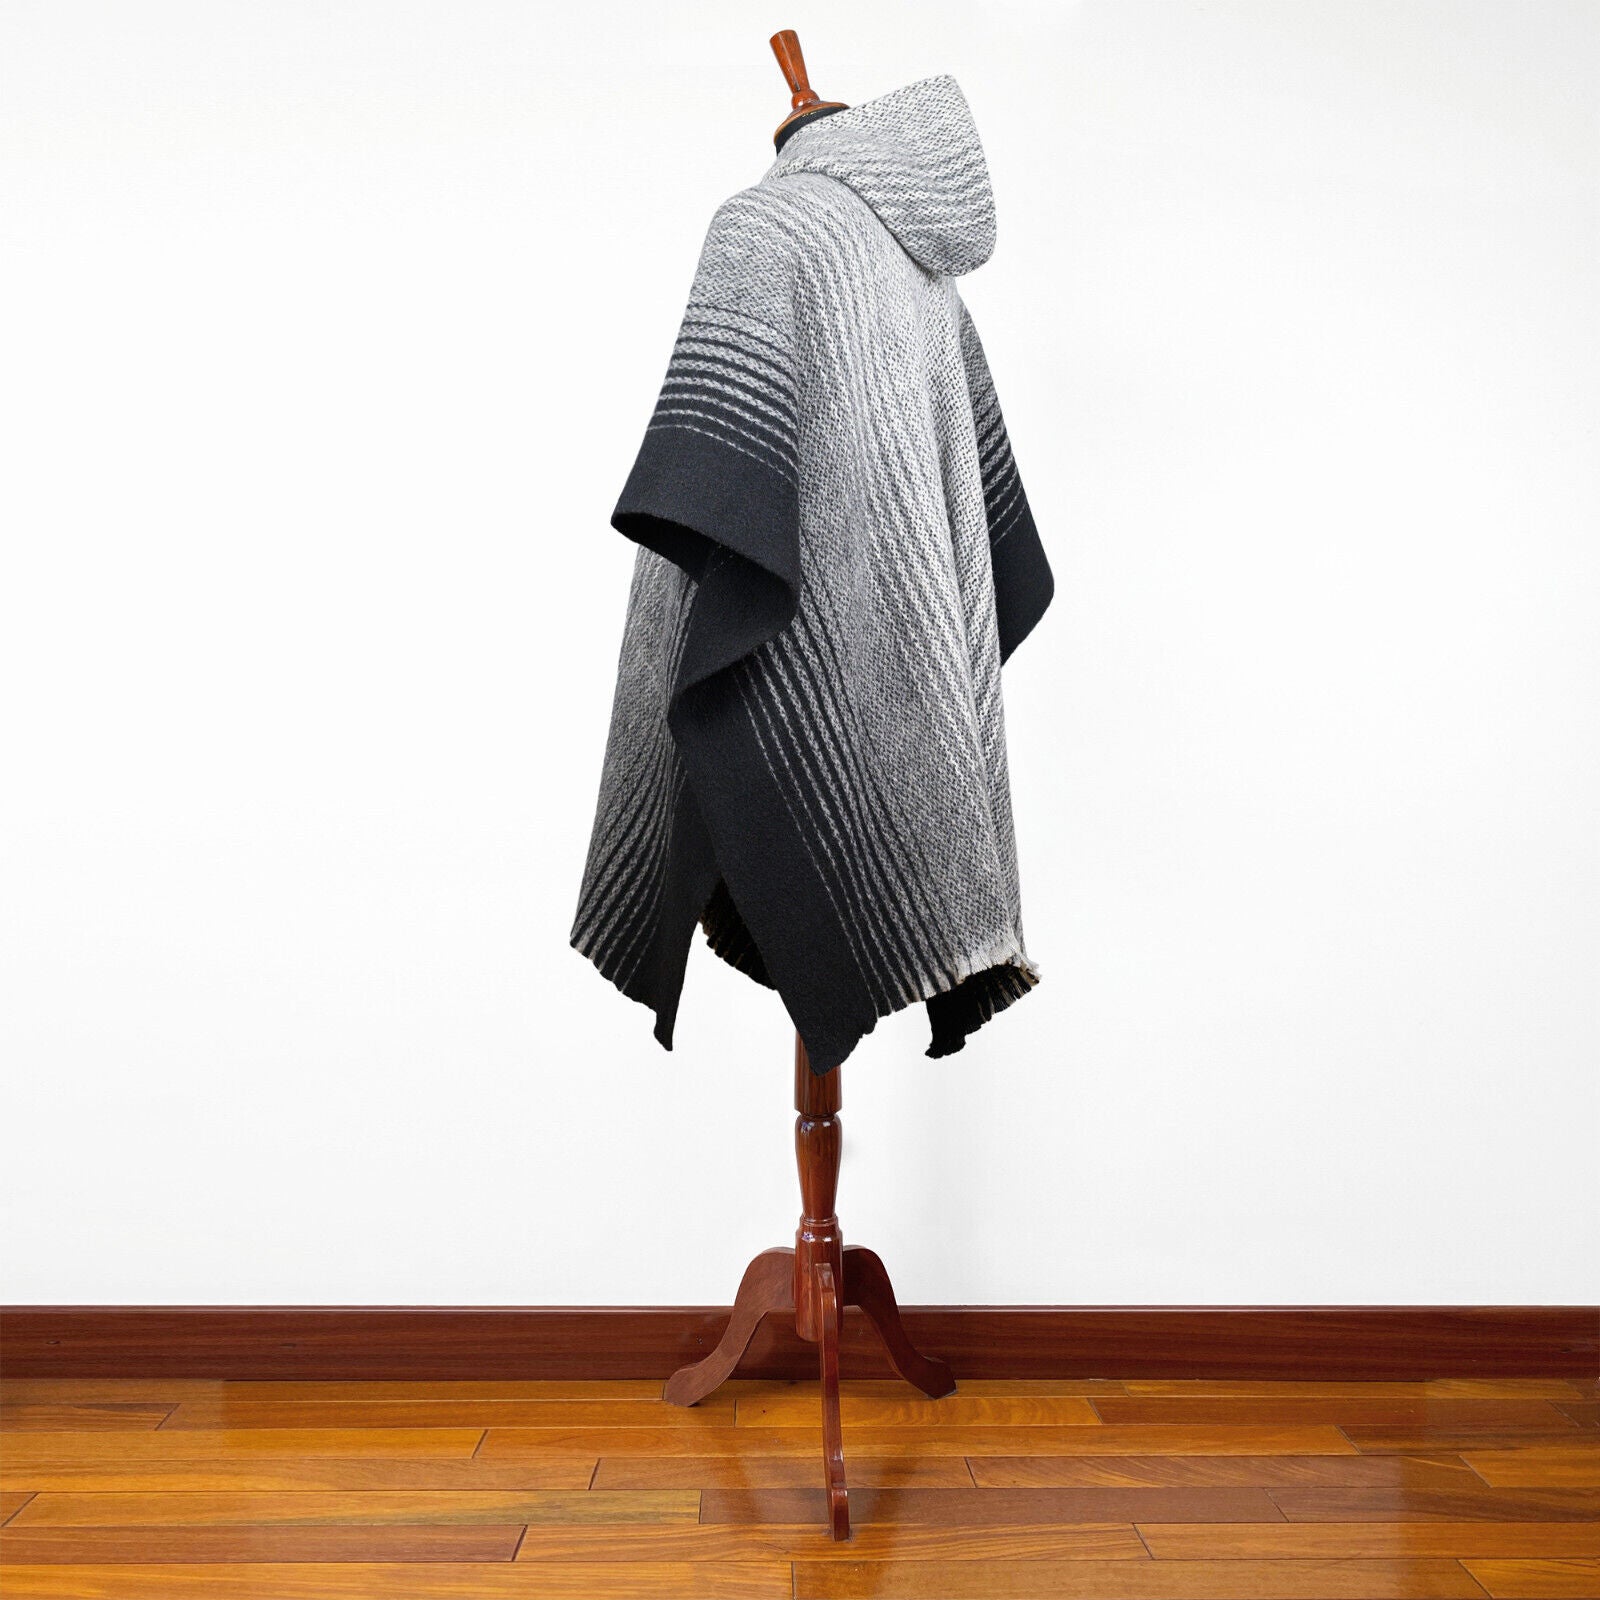 Changaimina - Llama Wool Unisex South American Handwoven Hooded Poncho - gray thin striped pattern